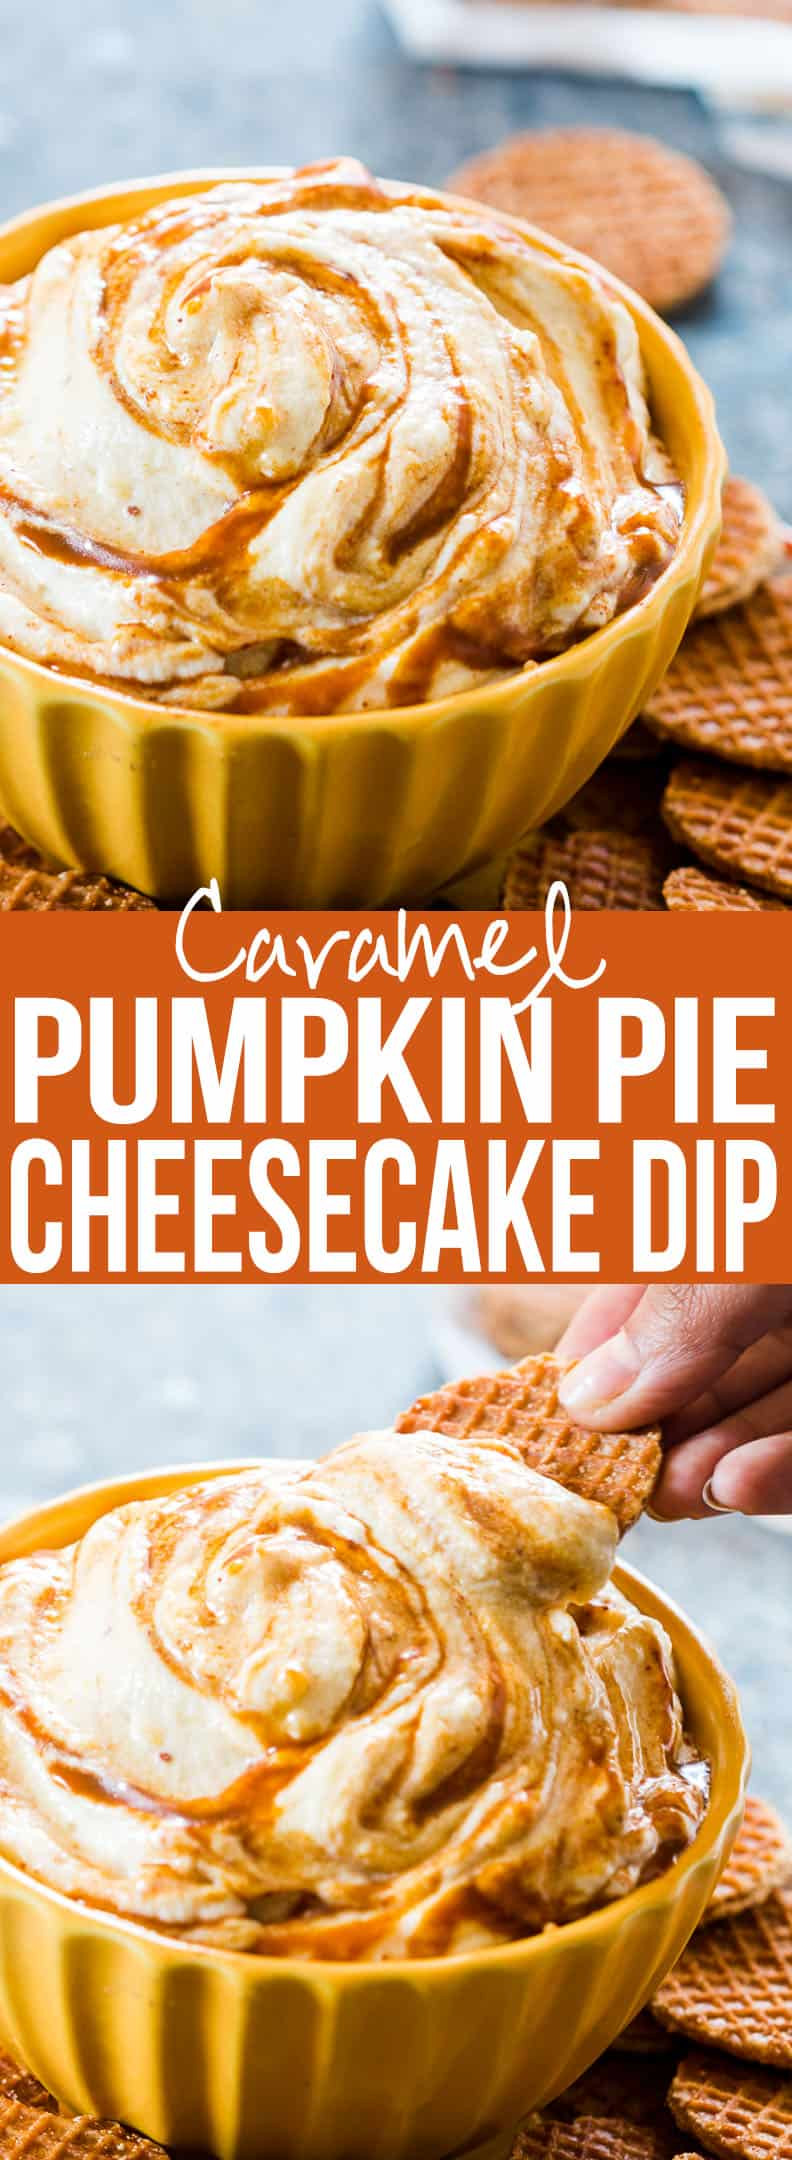 Pumpkin Pie Cheesecake Dip
 Caramel Pumpkin Pie Cheesecake Dip My Food Story